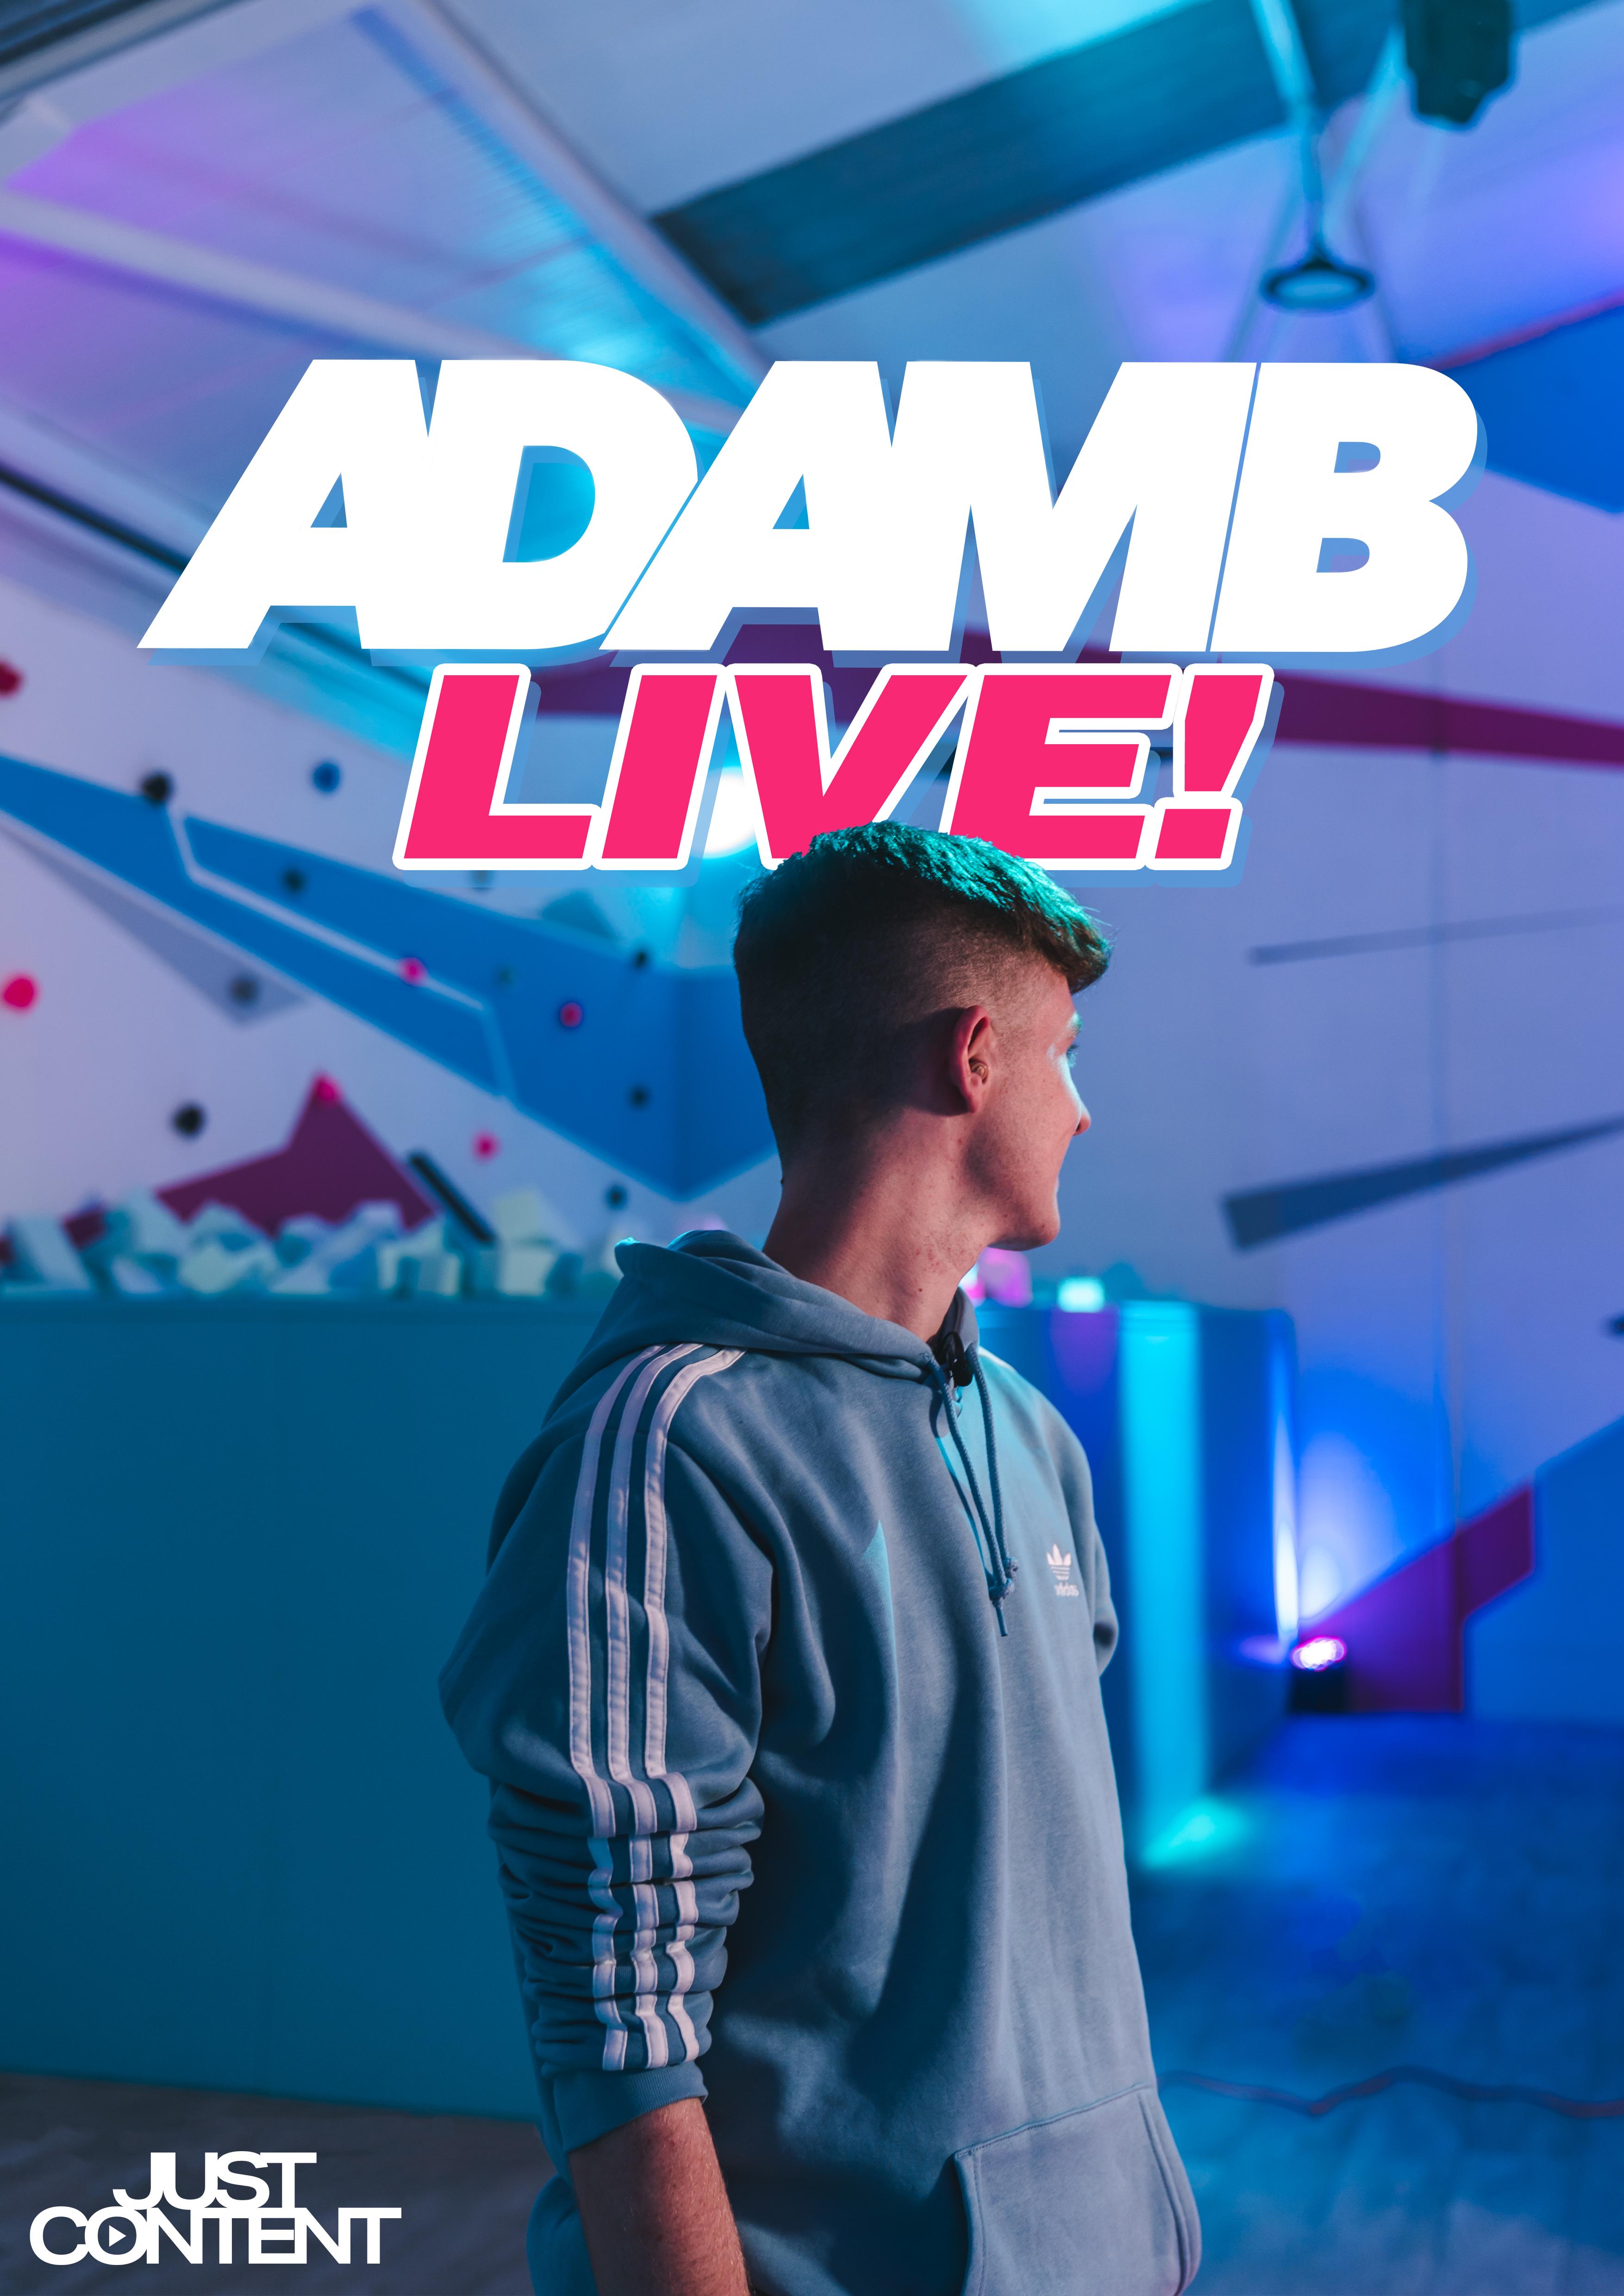 Adam B LIVE!